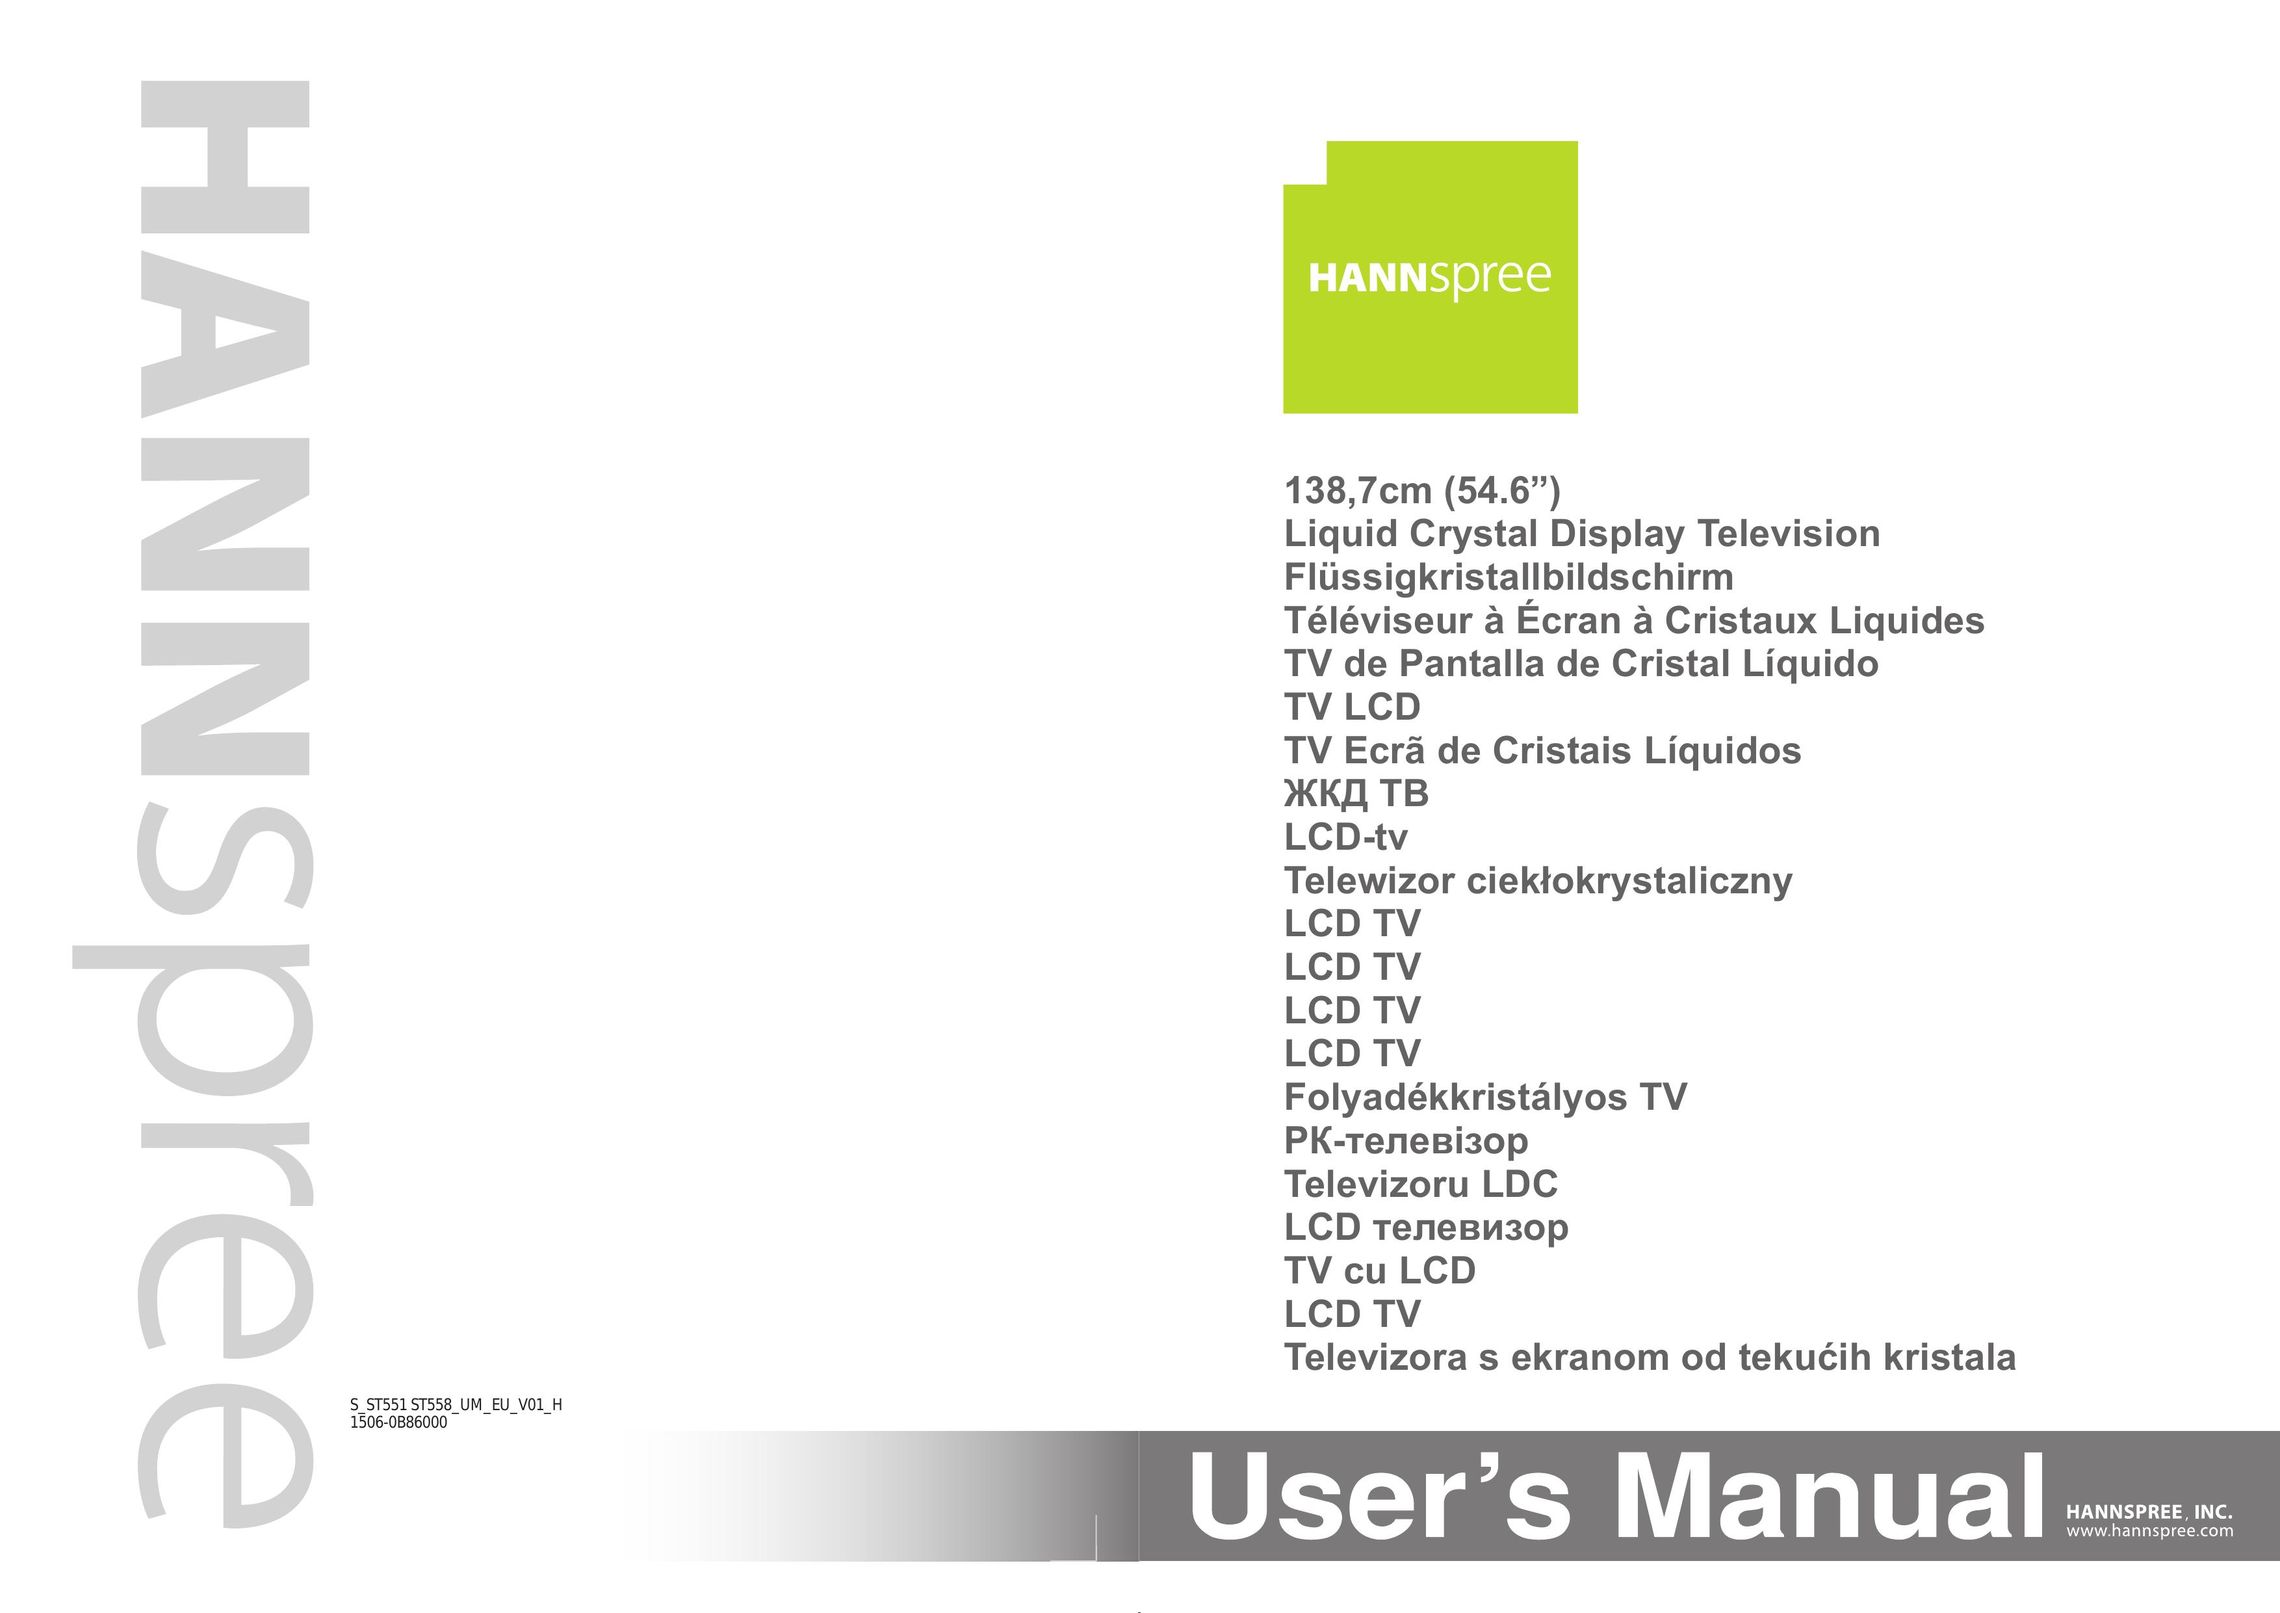 HANNspree 1506-0B86000 Flat Panel Television User Manual